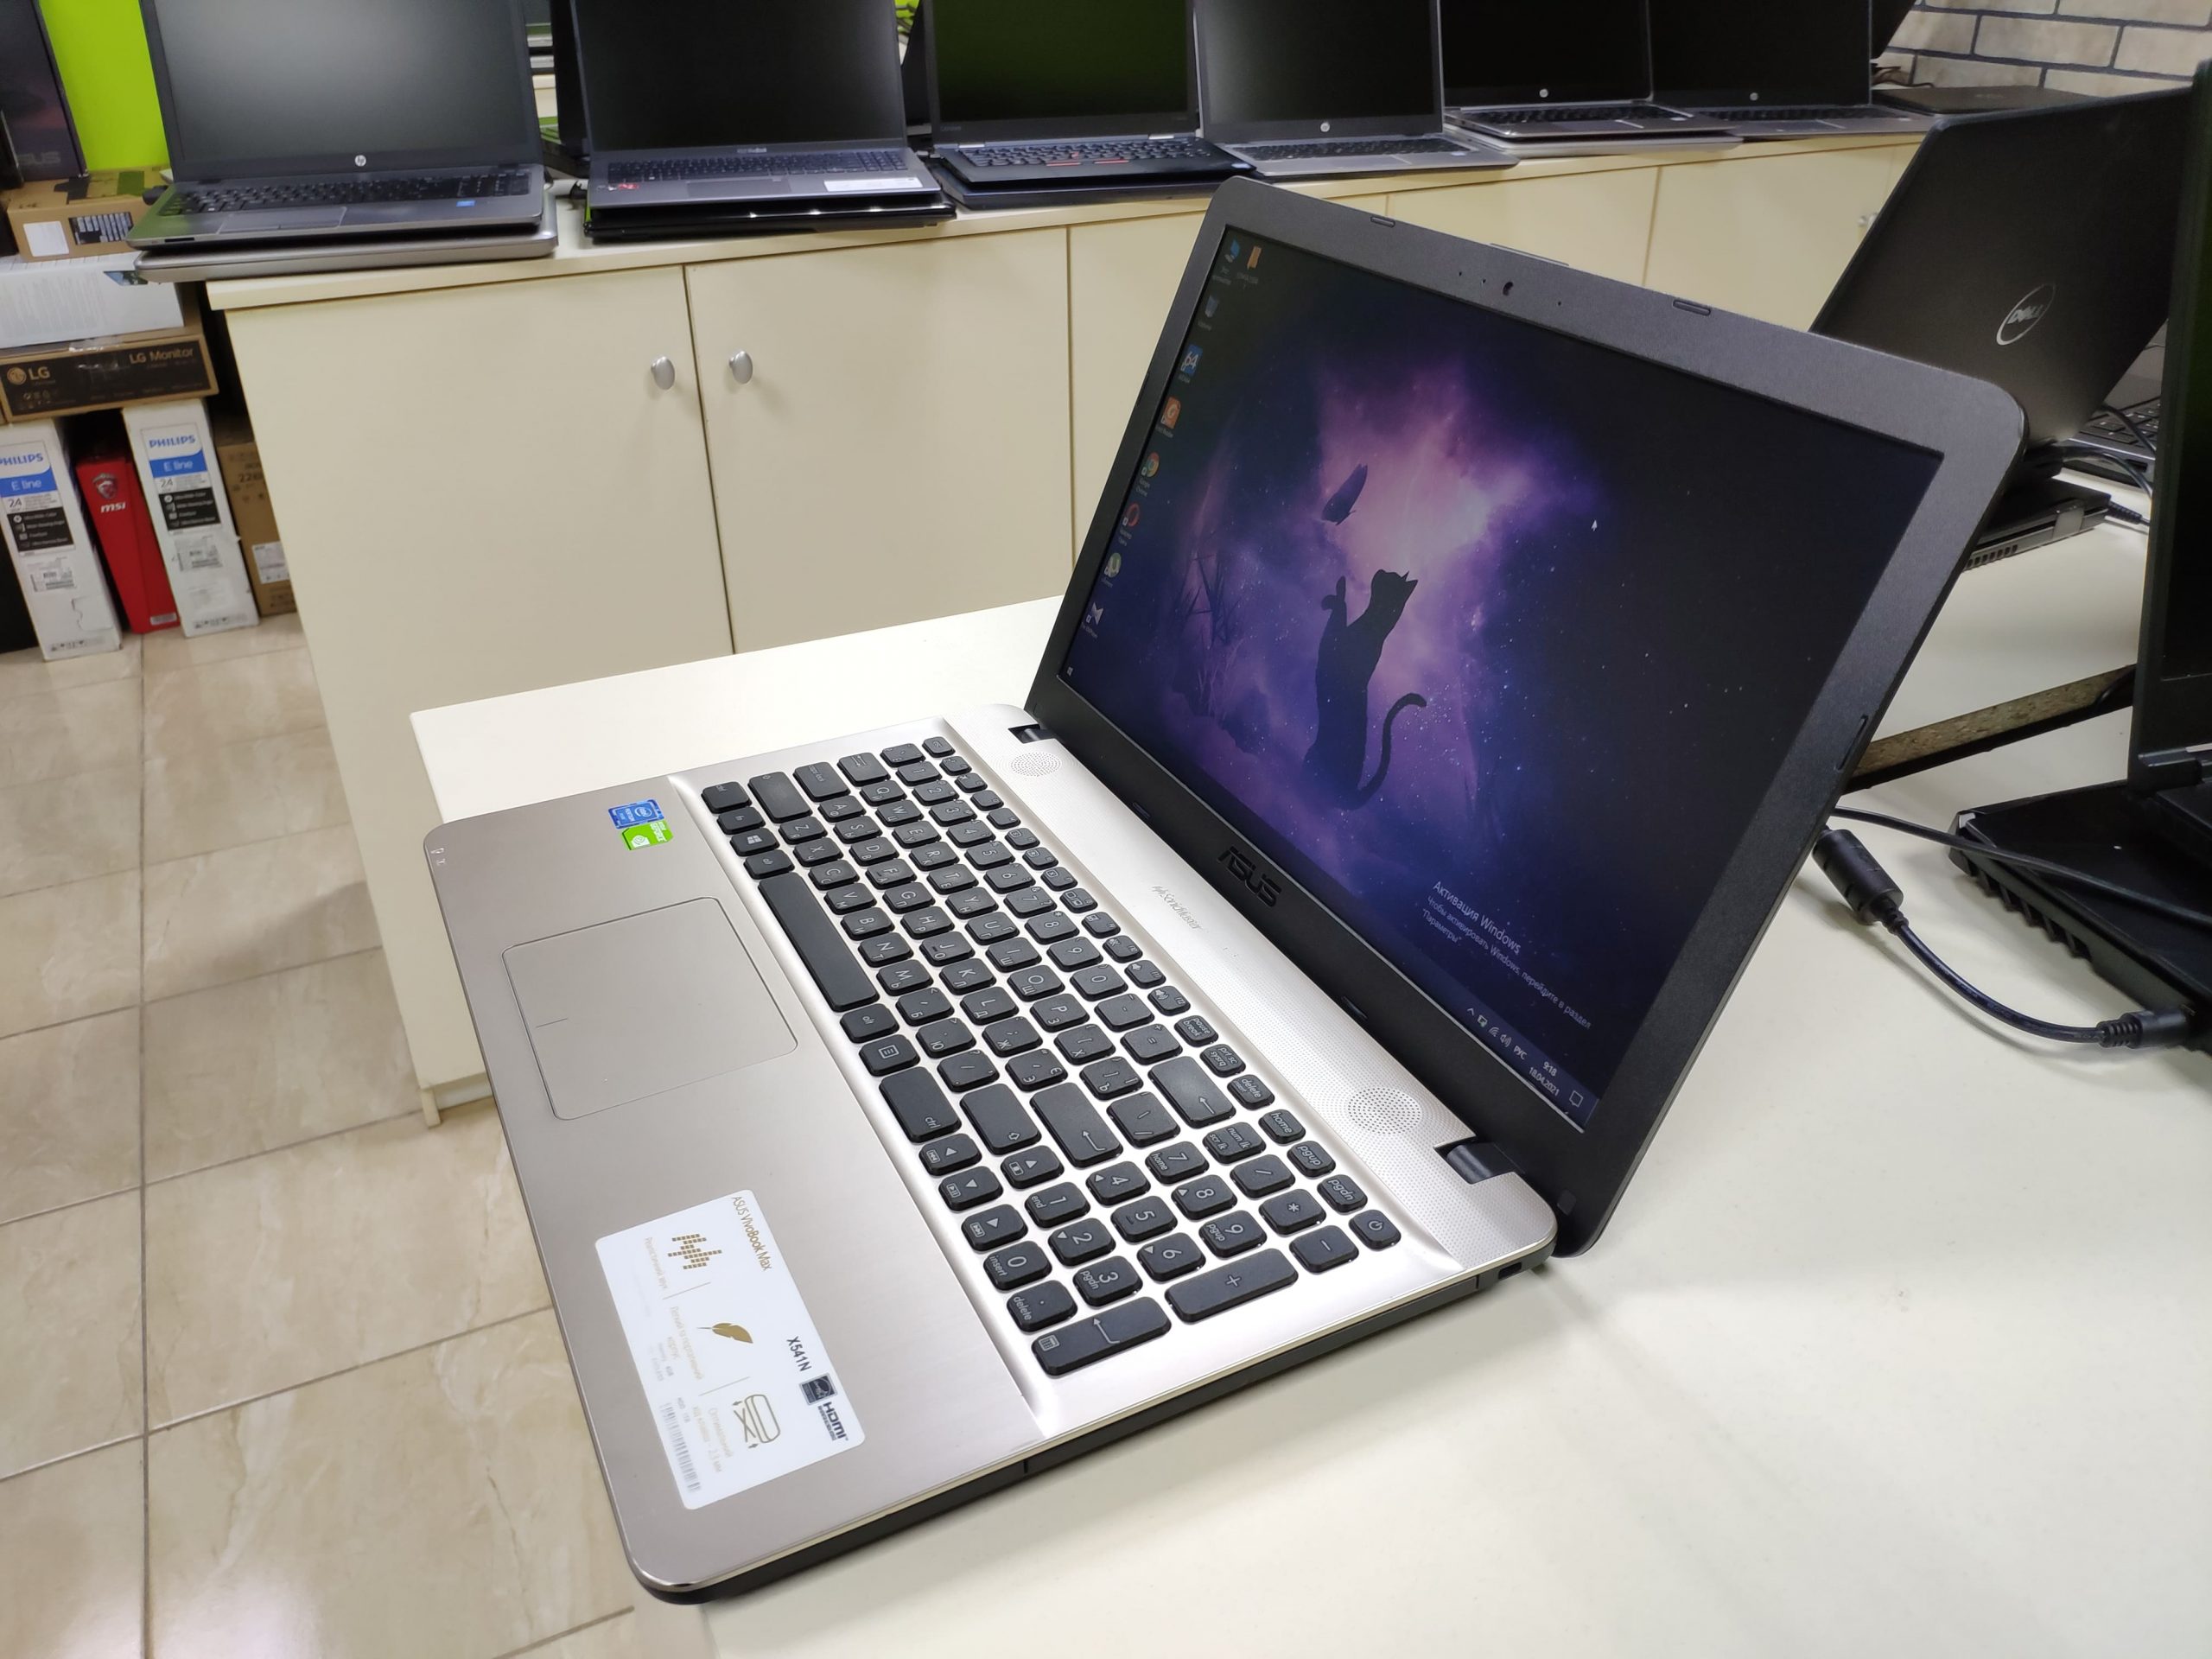 Ноутбук Asus X541n Цена